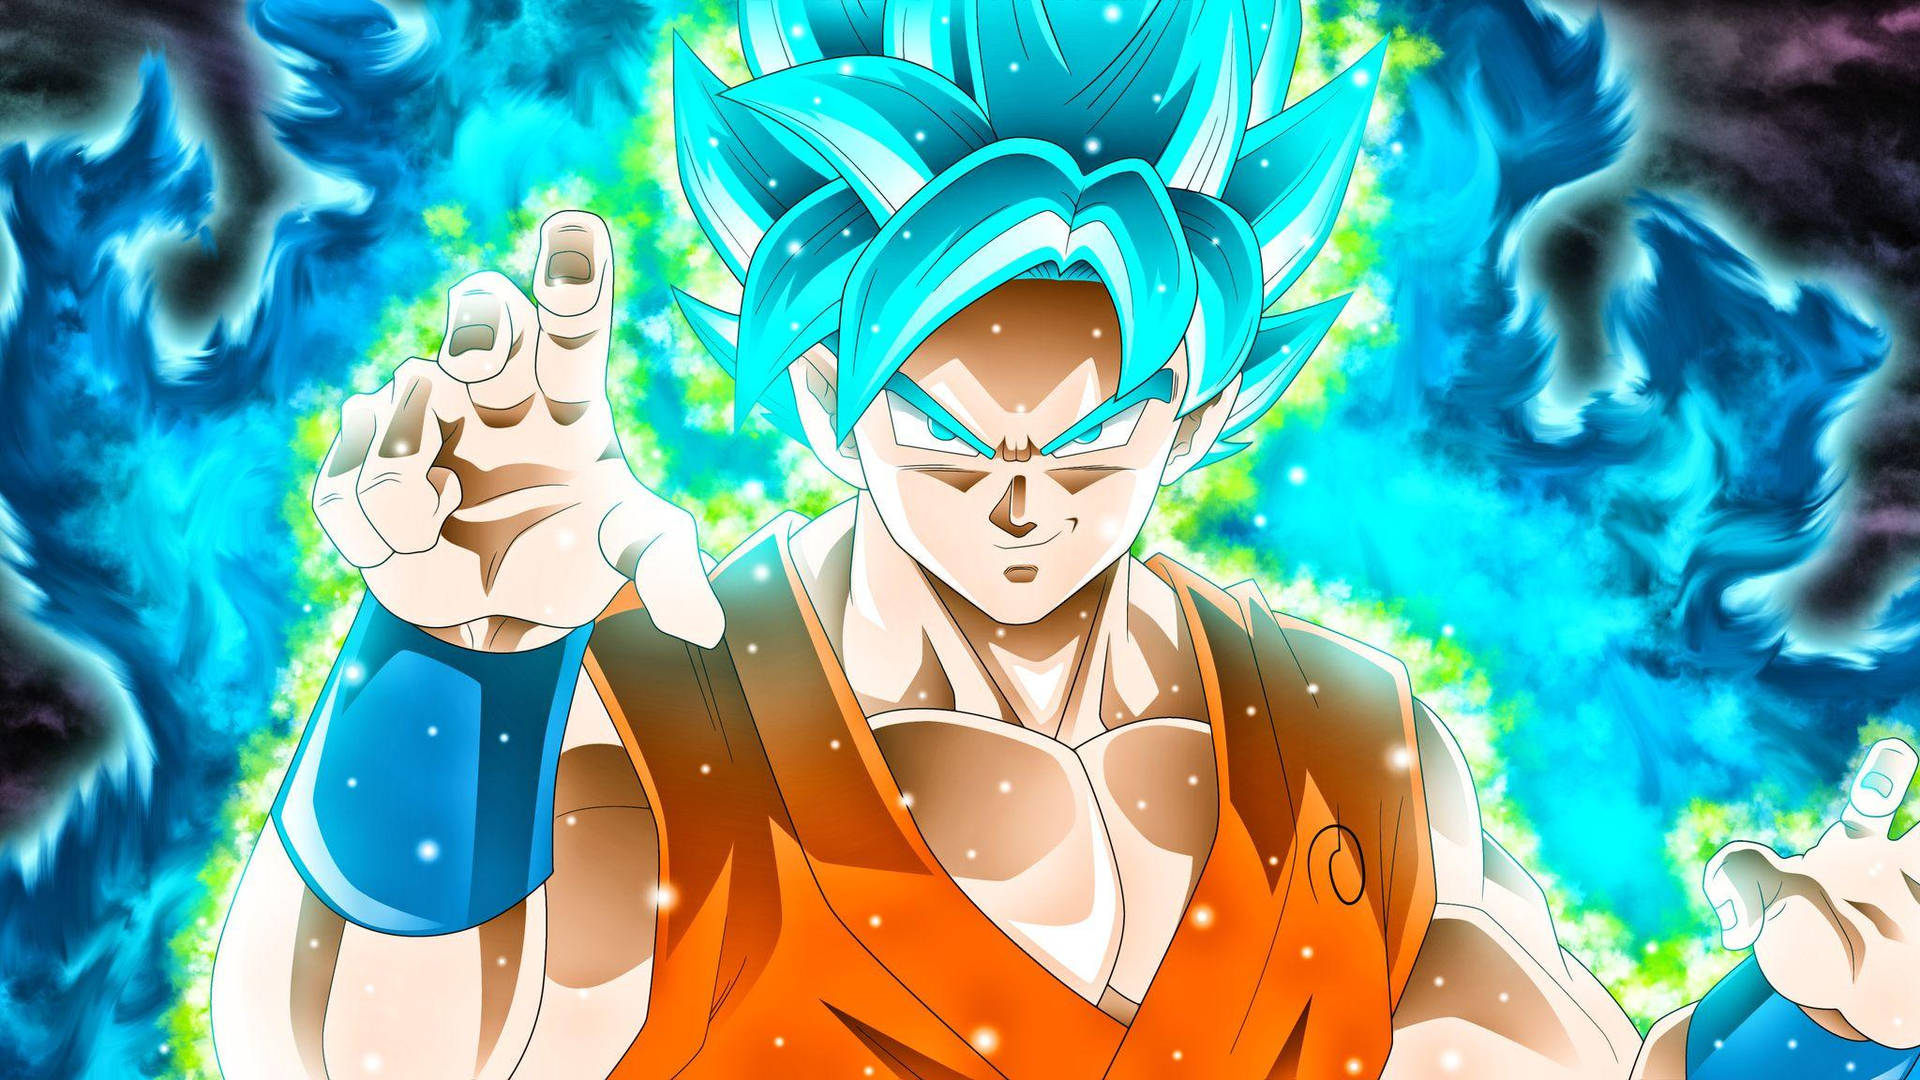 Free Goku Dragon Ball Super Wallpaper Downloads, Goku Dragon Ball Super Wallpaper for FREE